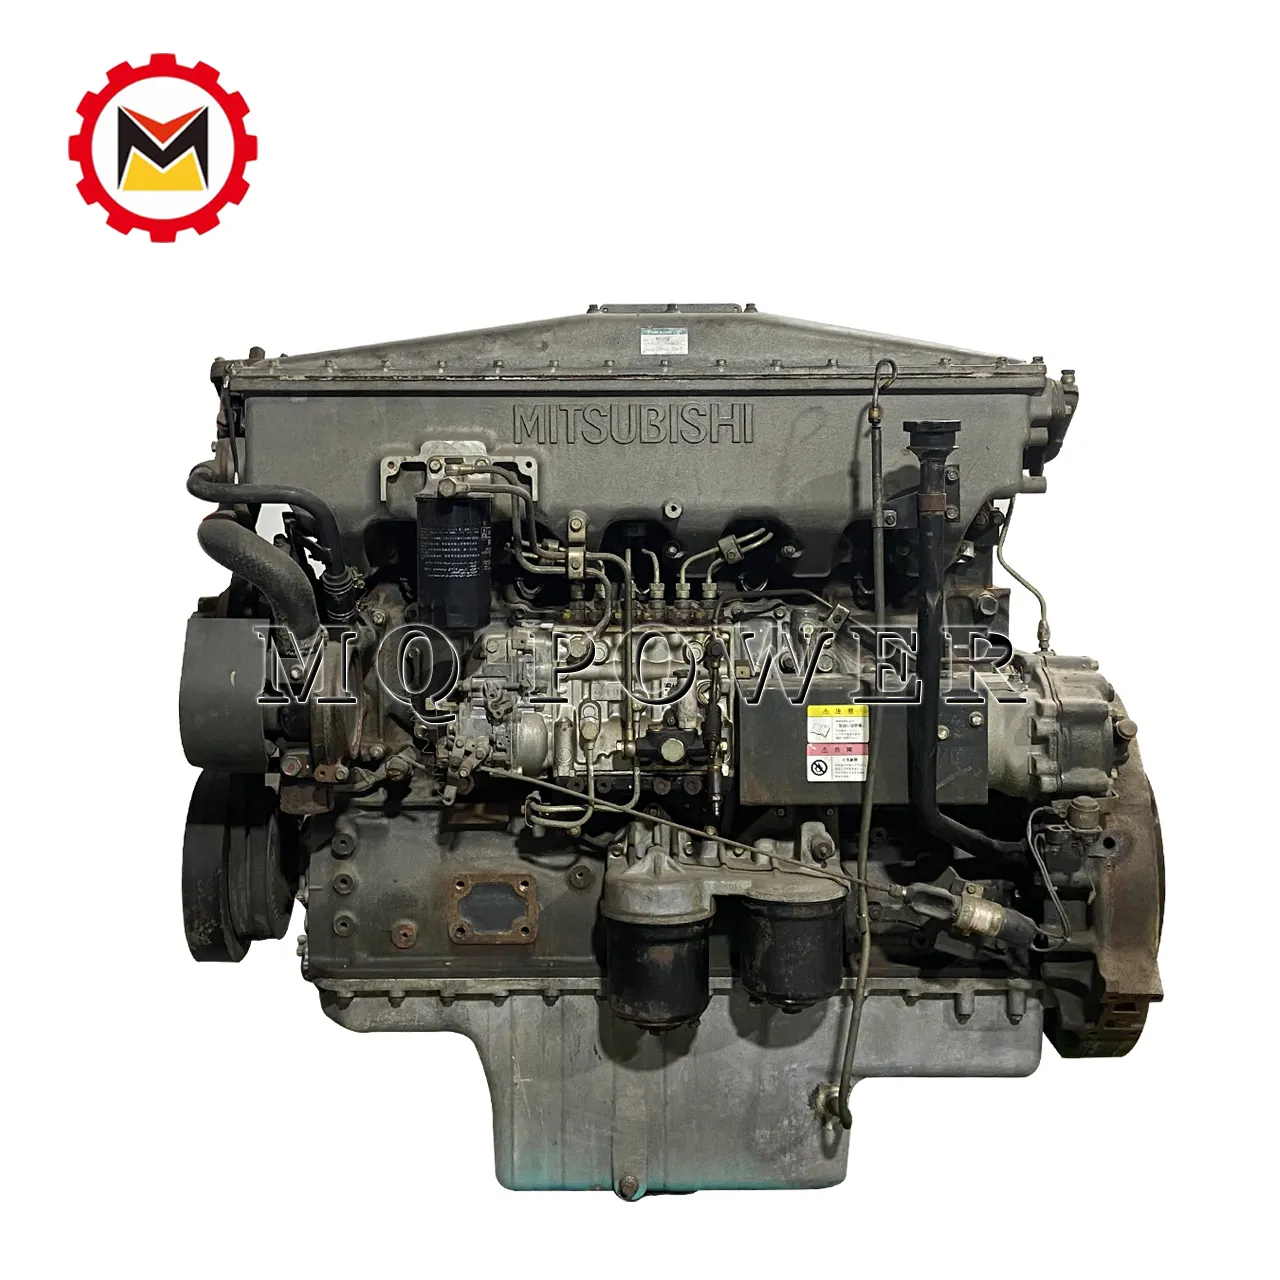 Maoqun motor diesel original, motor diesel original japonês completo 6d22 6d22t 6d24 6d24tcl para mitsubishi